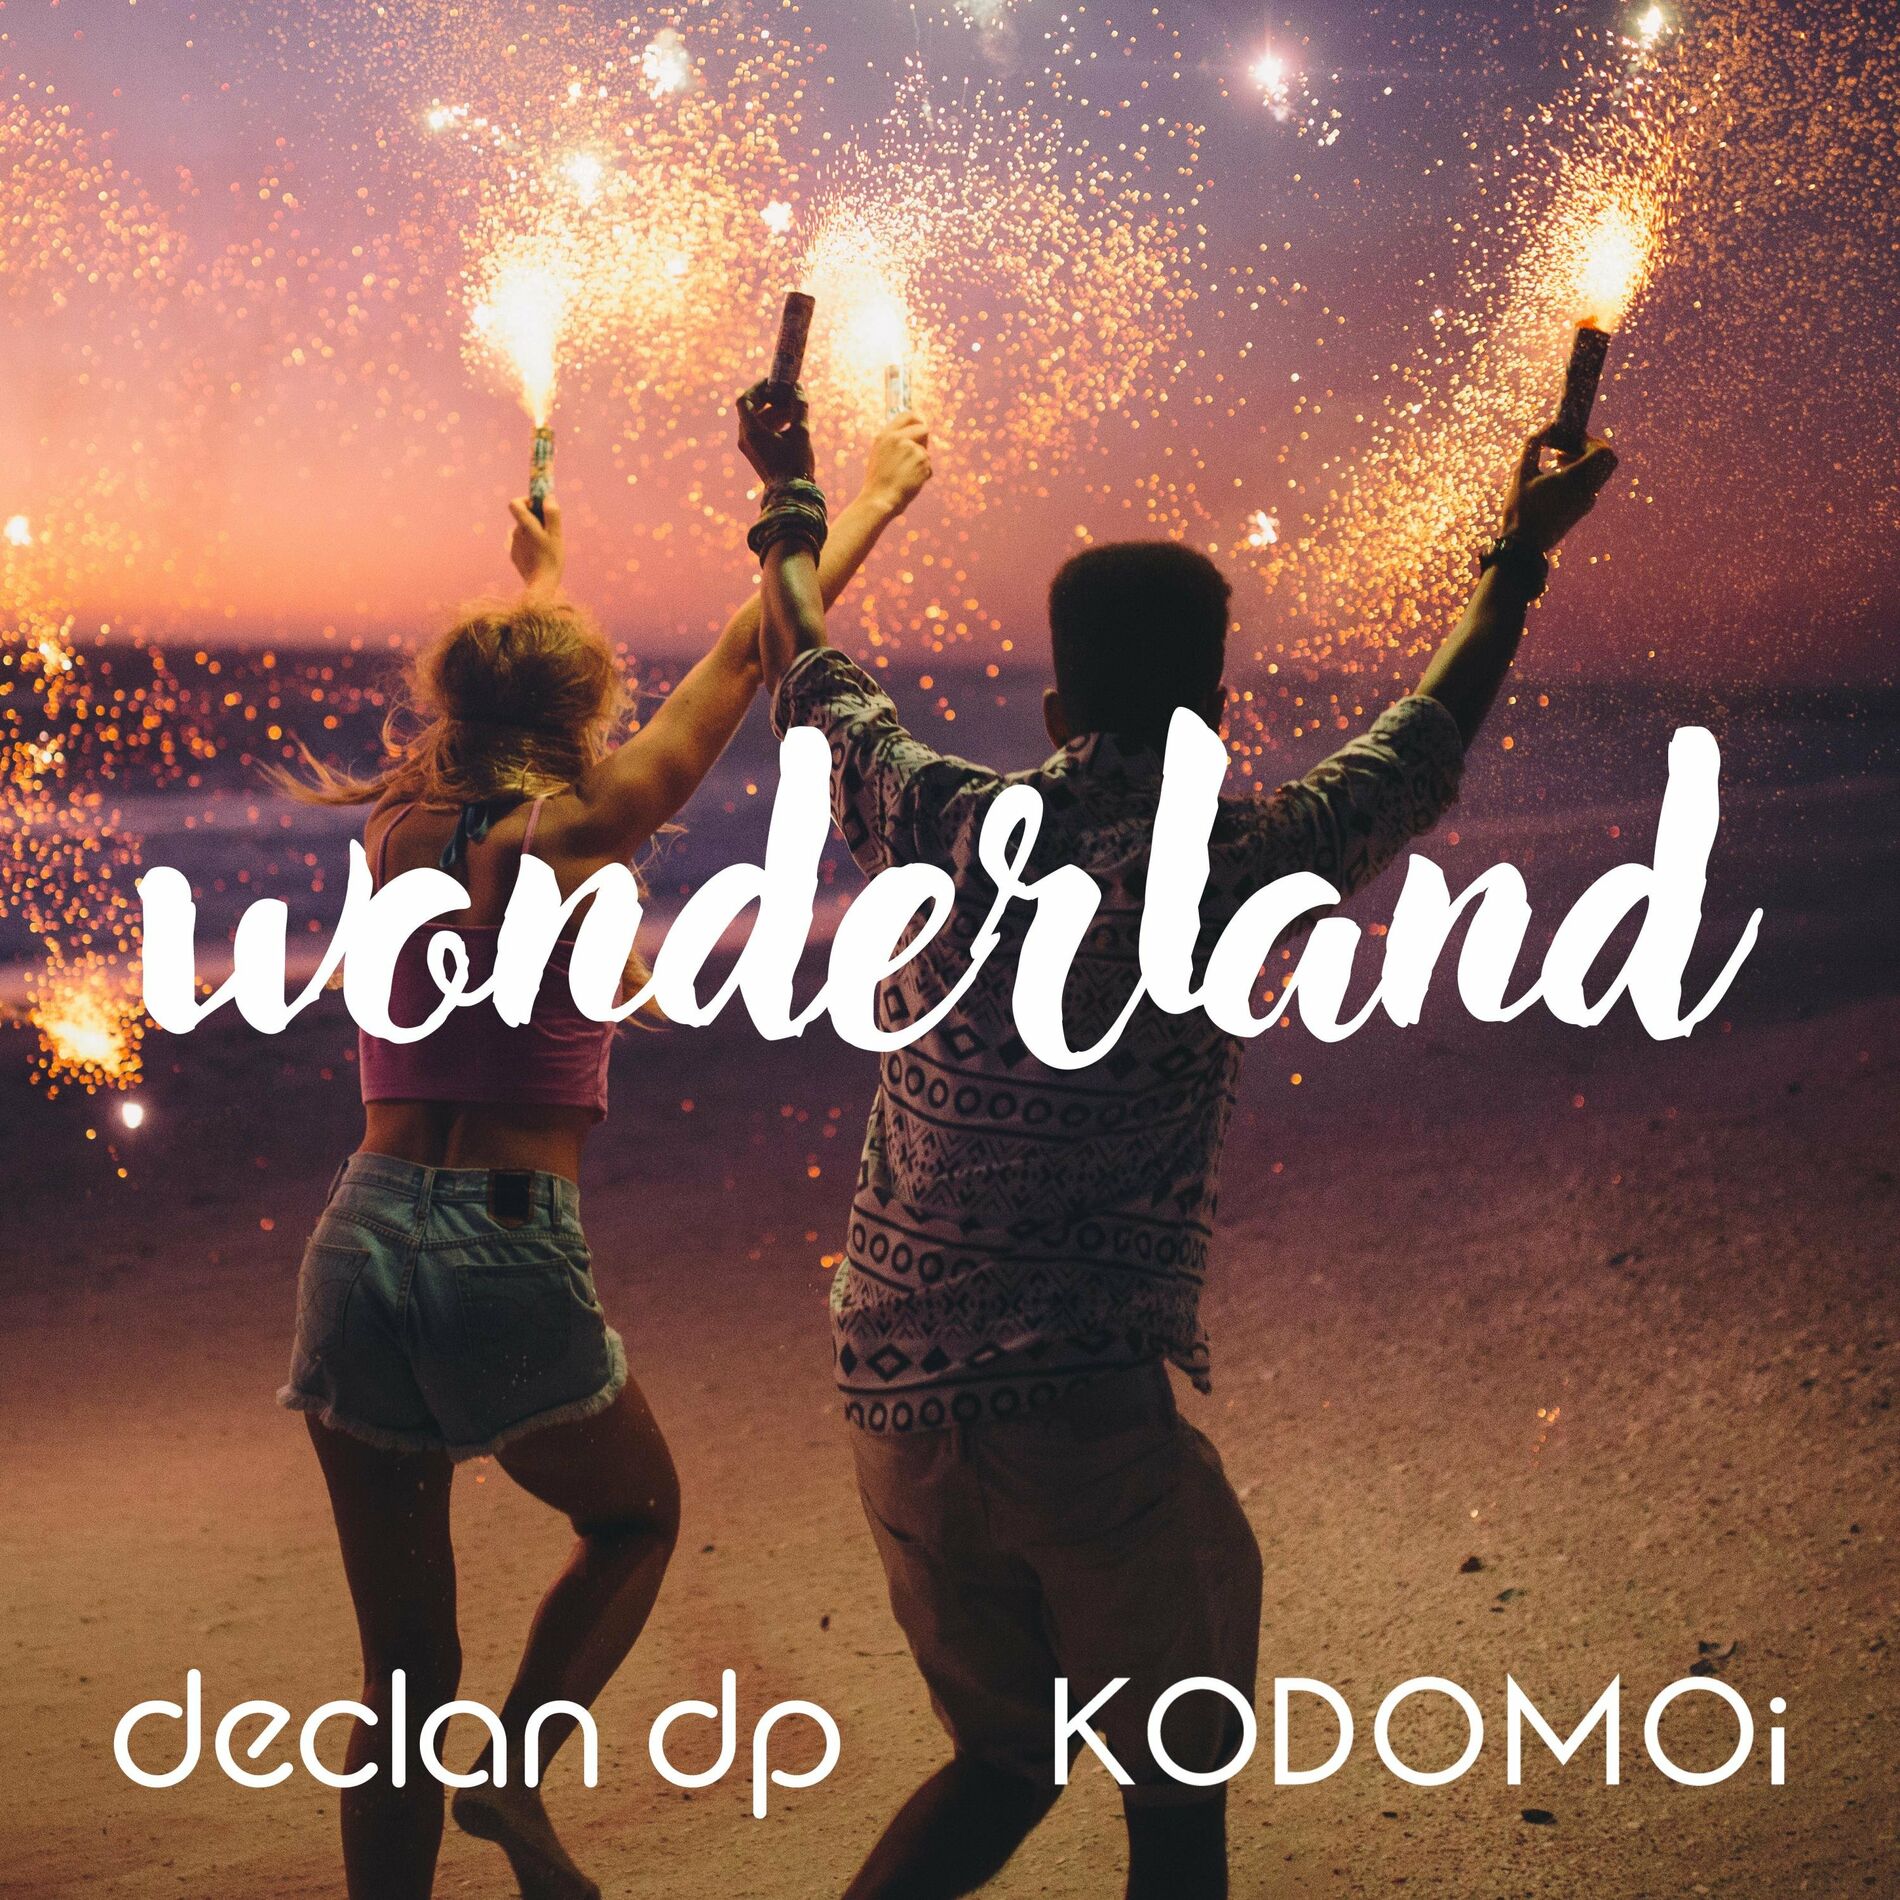 KODOMOi: albums, songs, playlists | Listen on Deezer